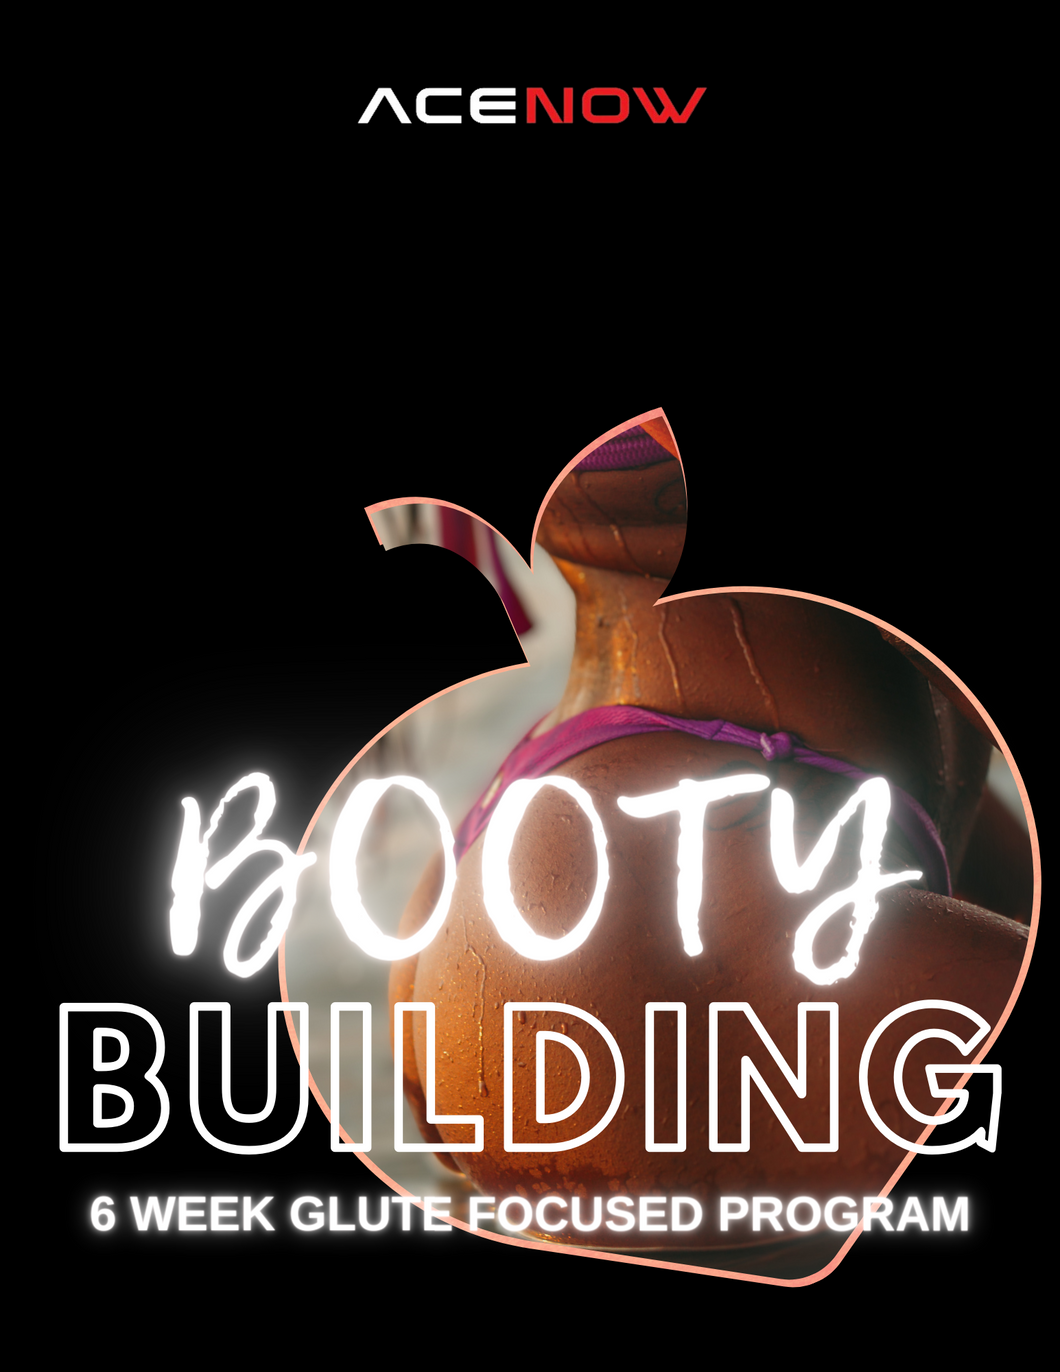 6 Week Booty Building Program